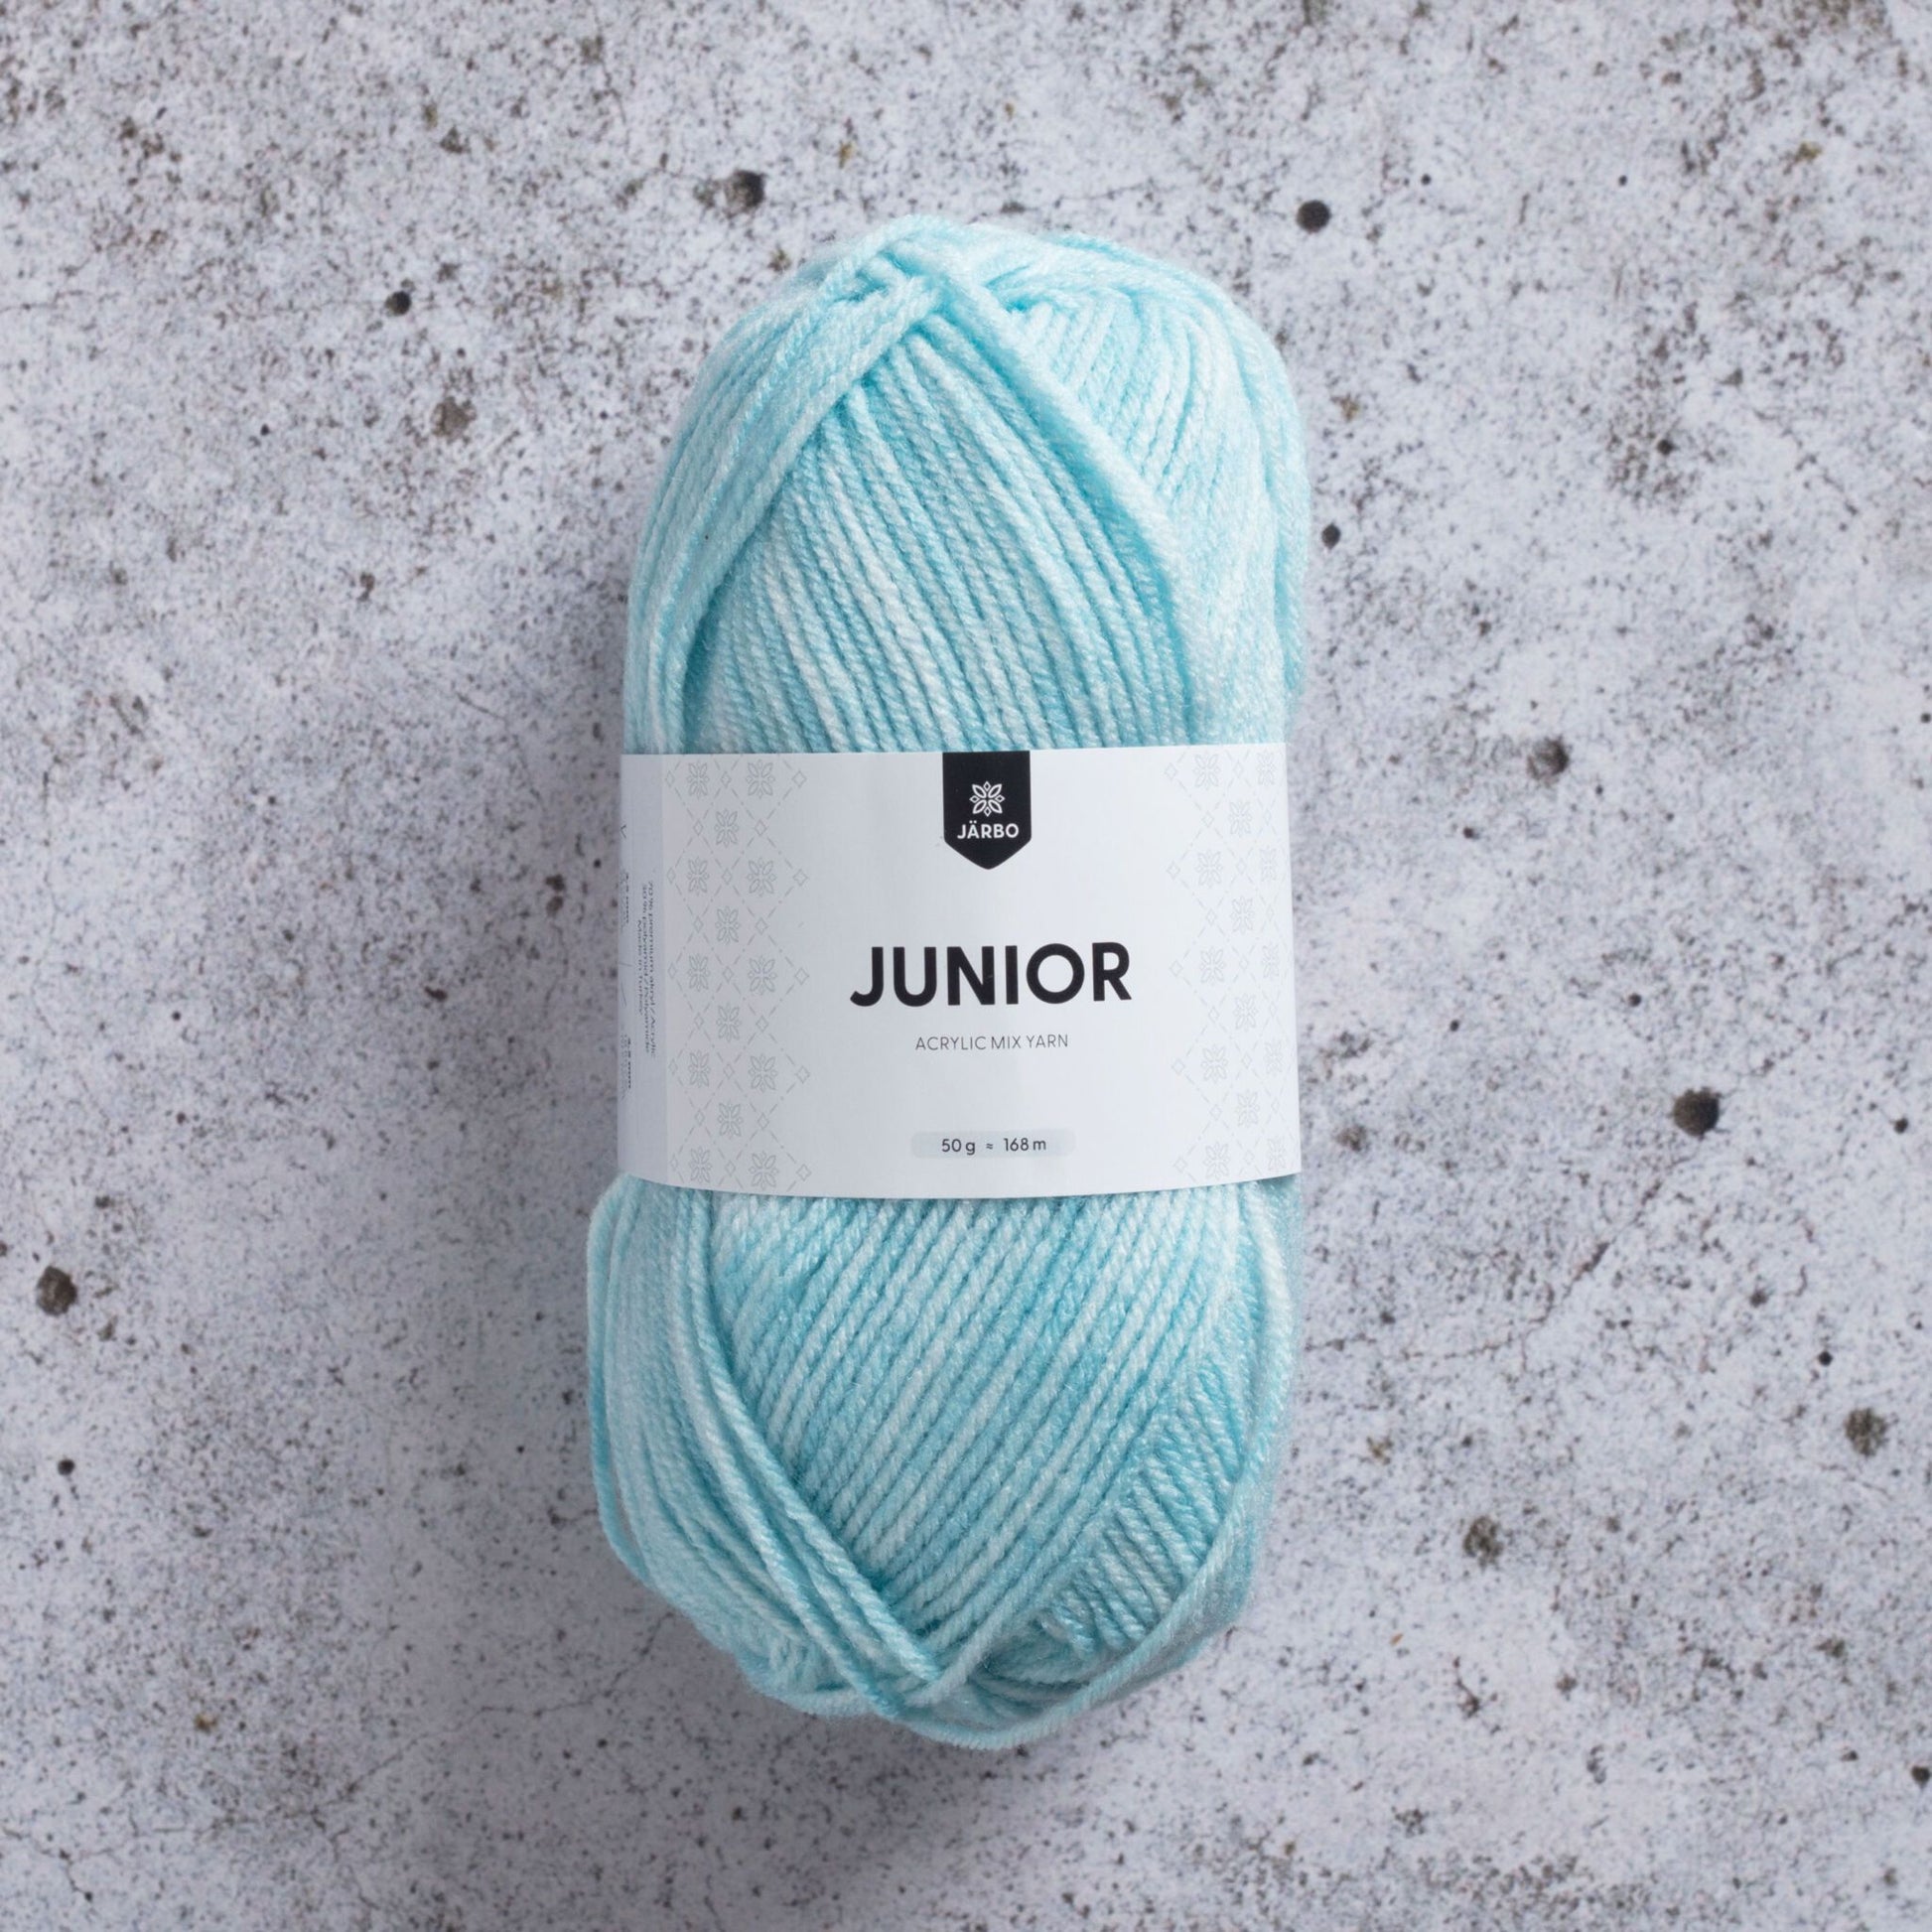 Järbo Junior - 037 Turquoise denimprint